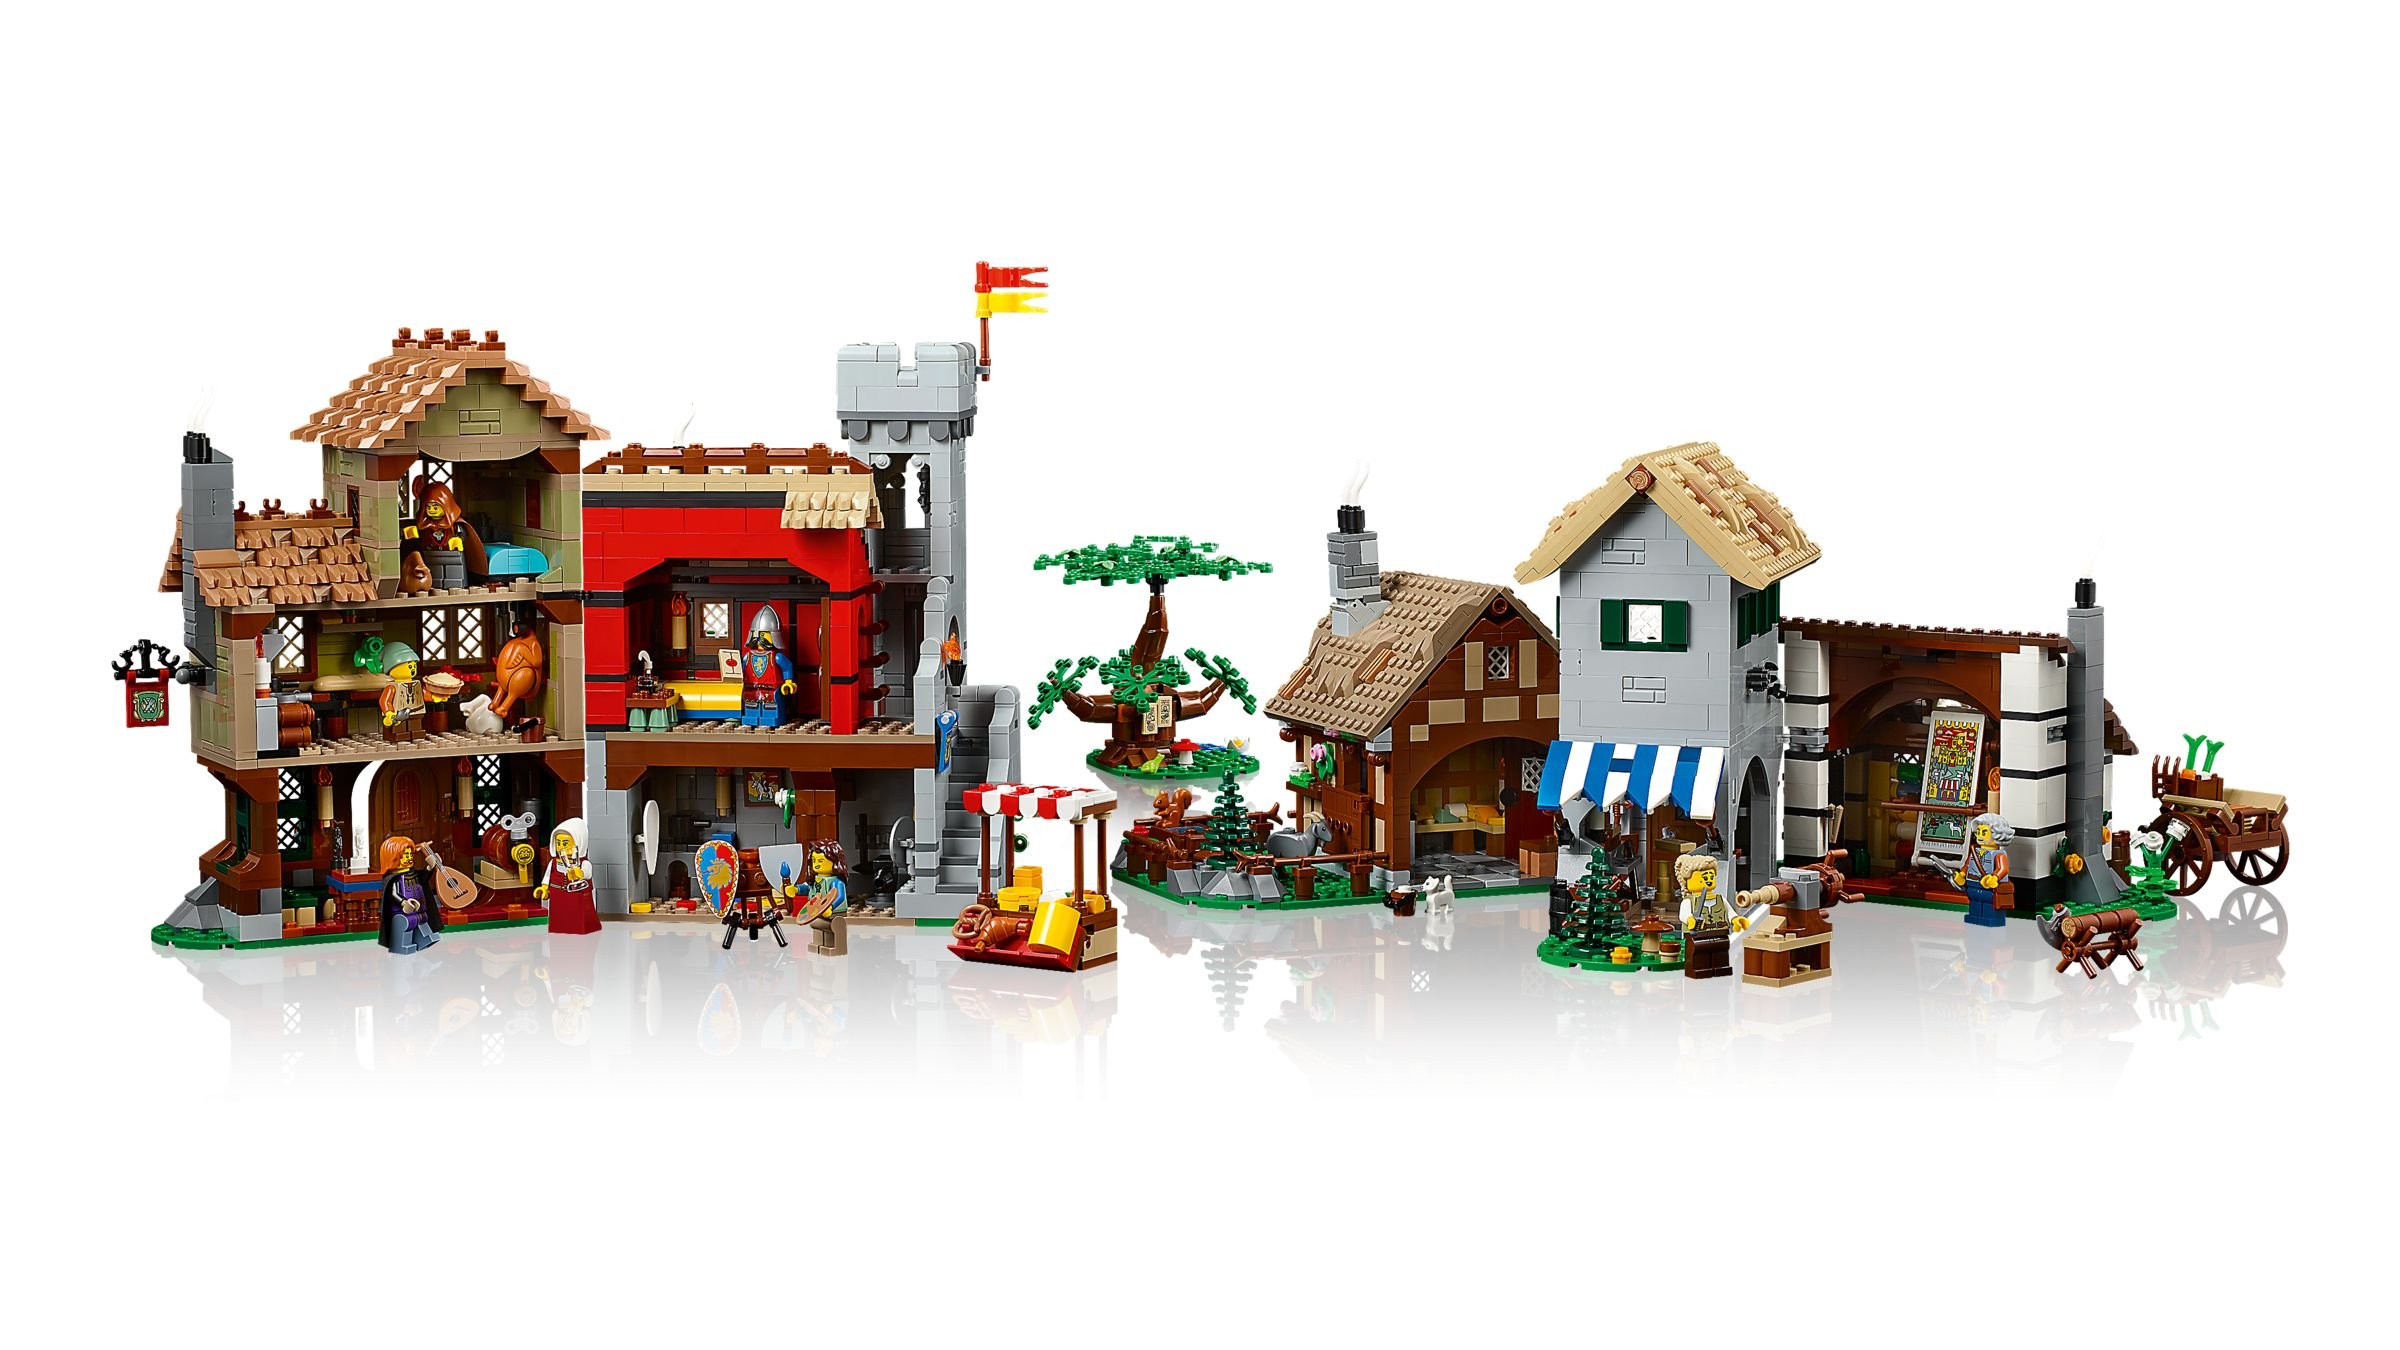 LEGO Advanced Models 10332 Mittelalterlicher Stadtplatz LEGO_10332_WEB_SEC03_NOBG.jpg